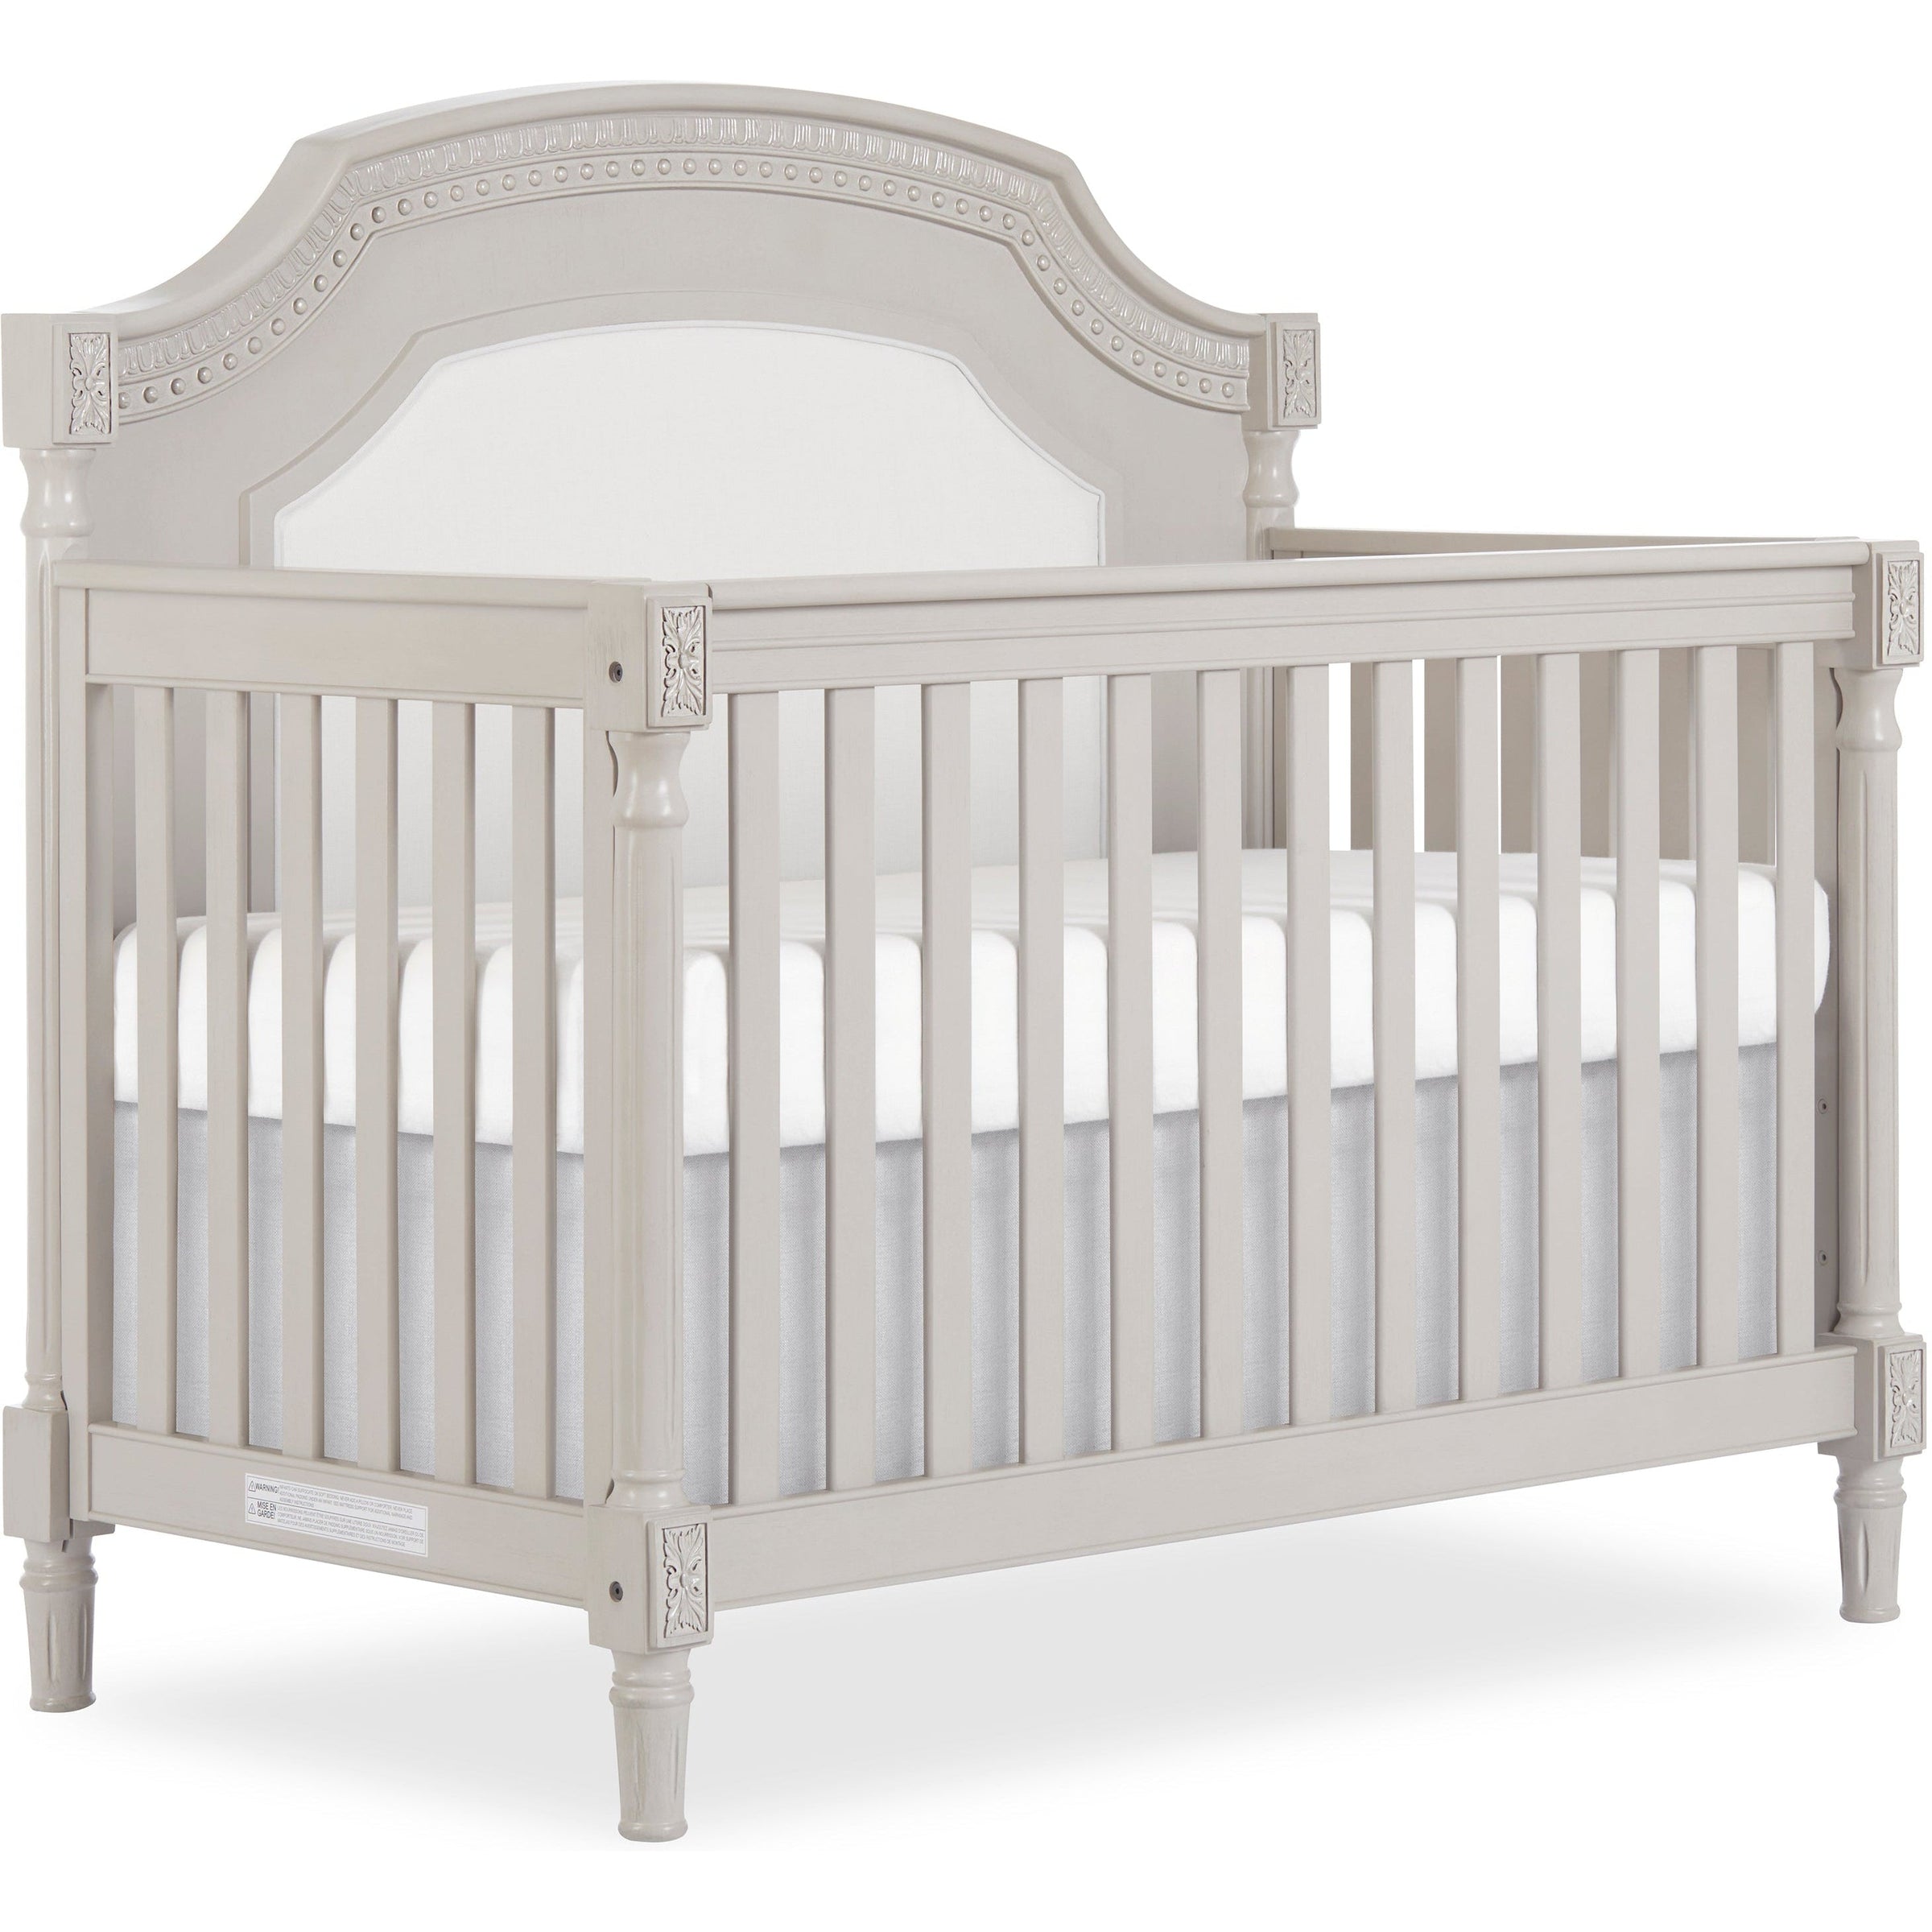 Avon Upholstered Convertible Crib